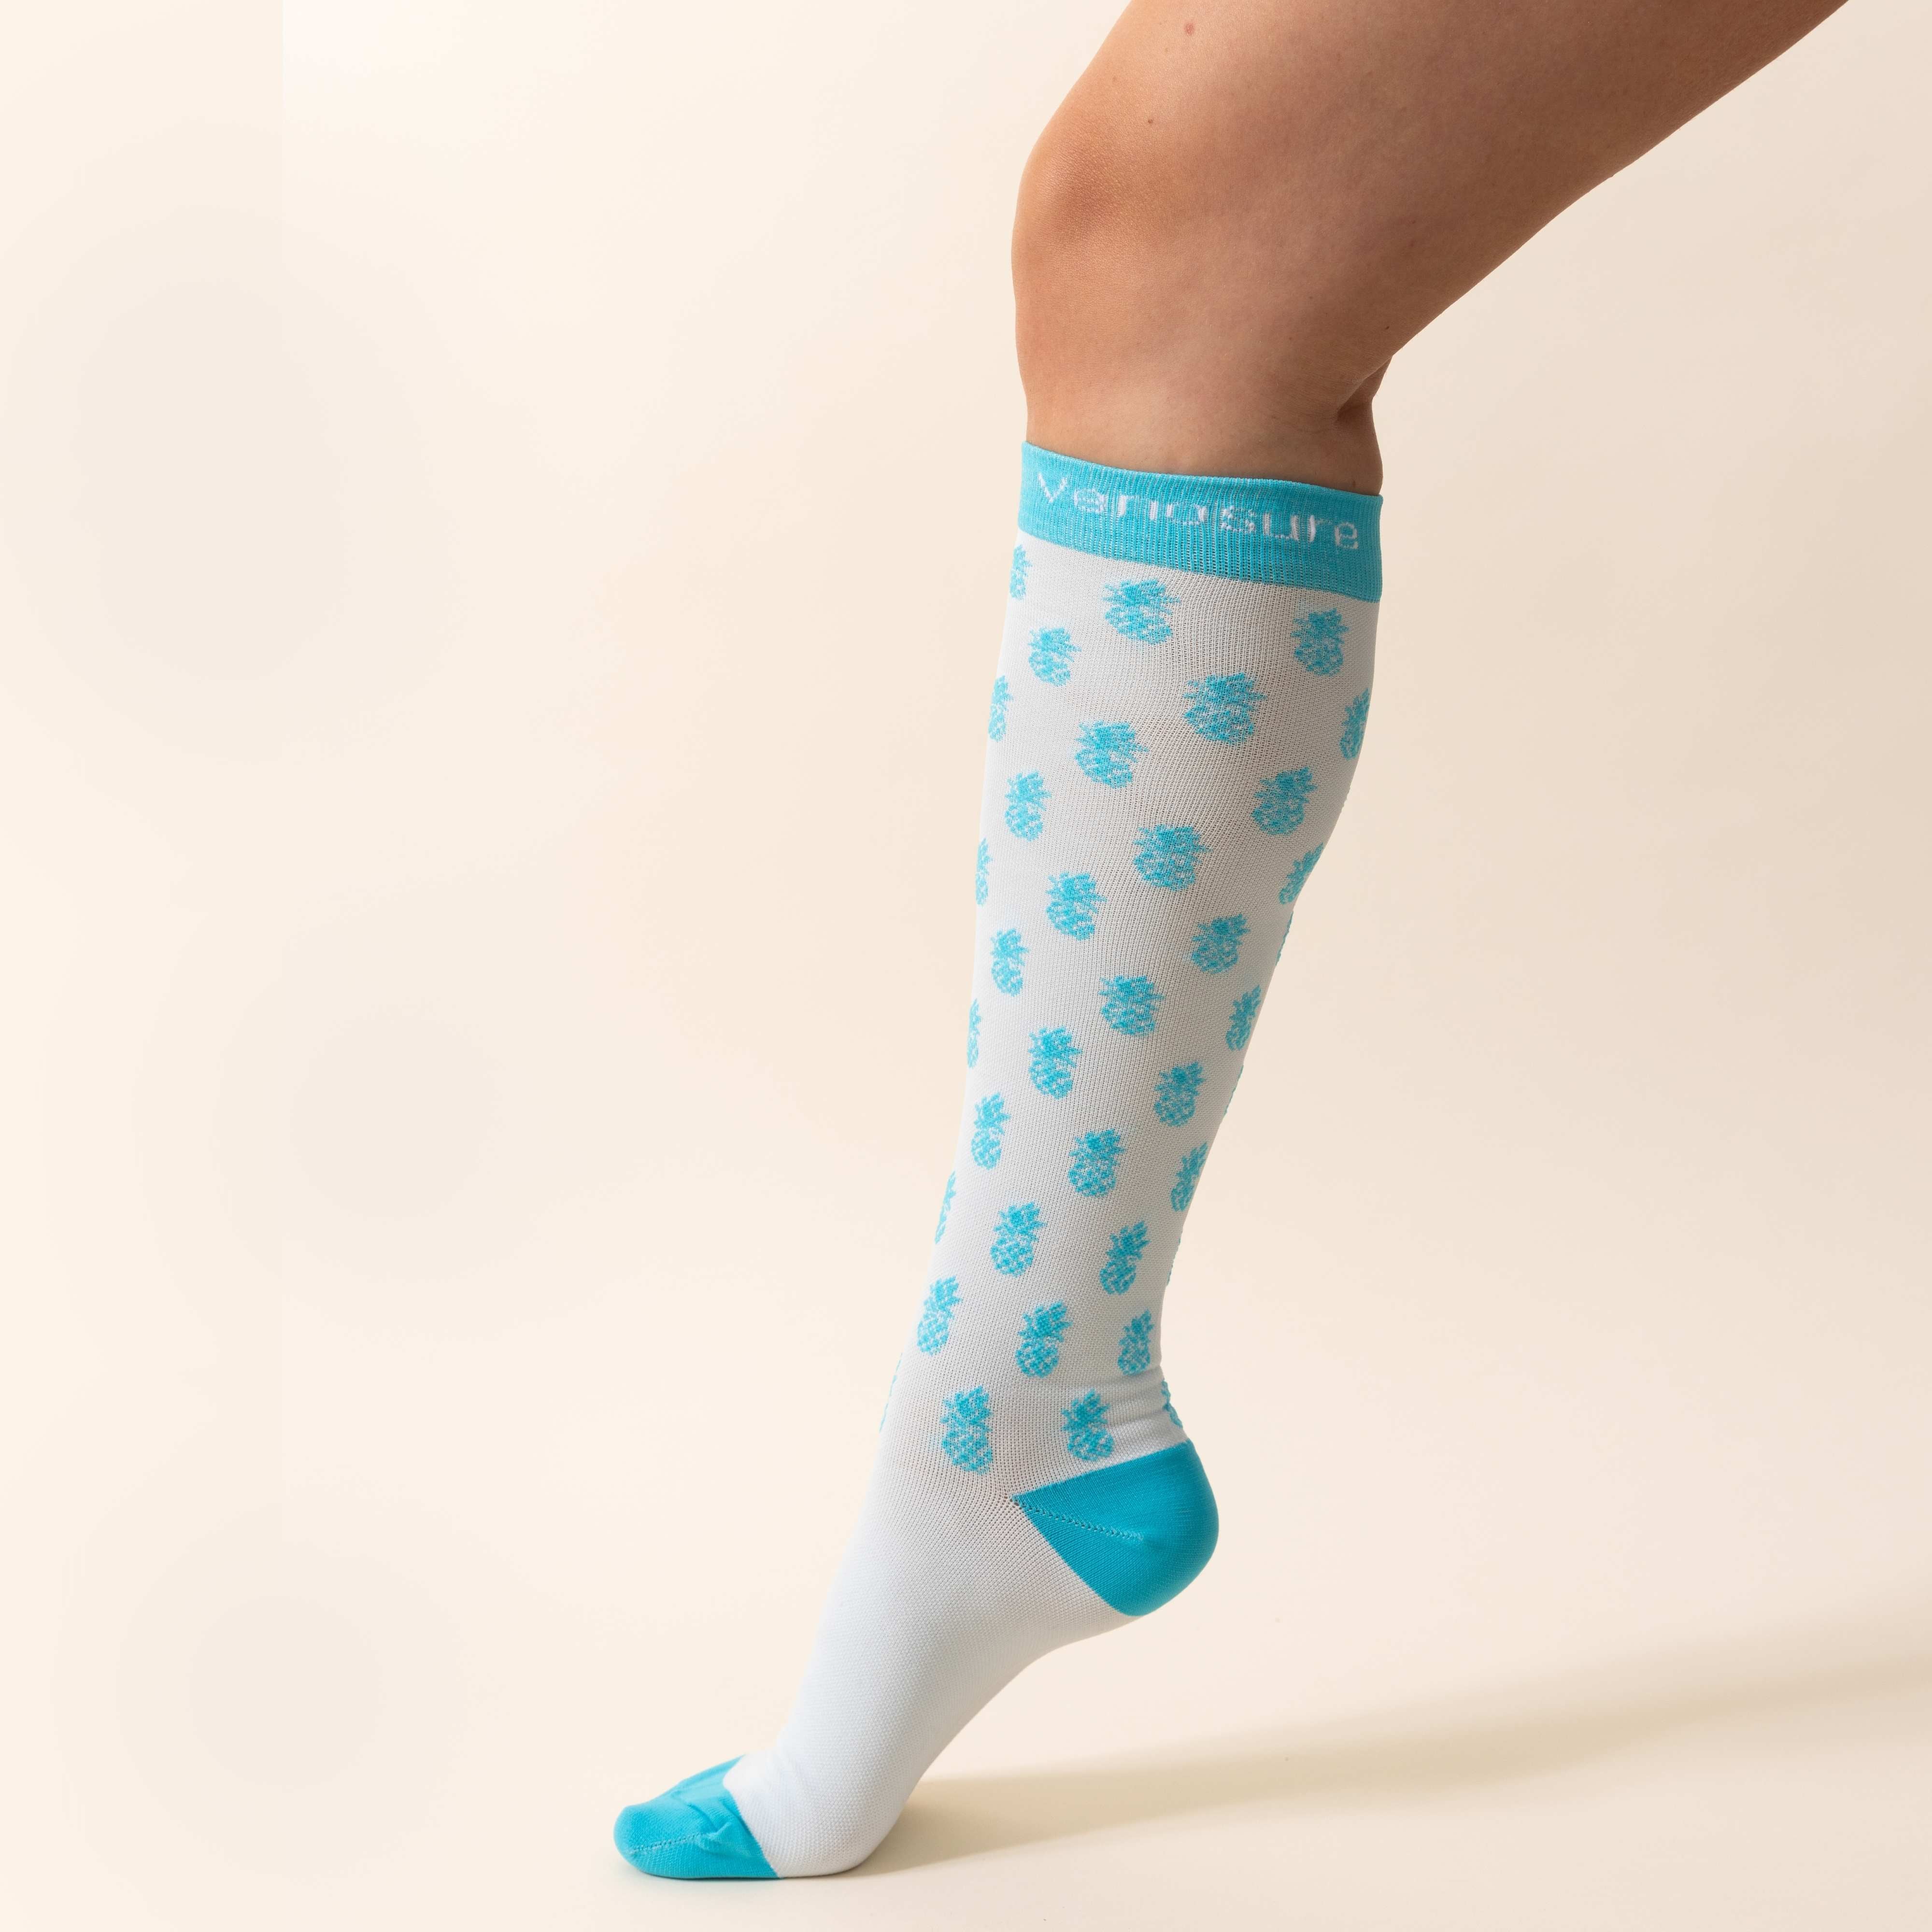 Medical Compression Socks Varicose Veins Socks in Surulere - Tools